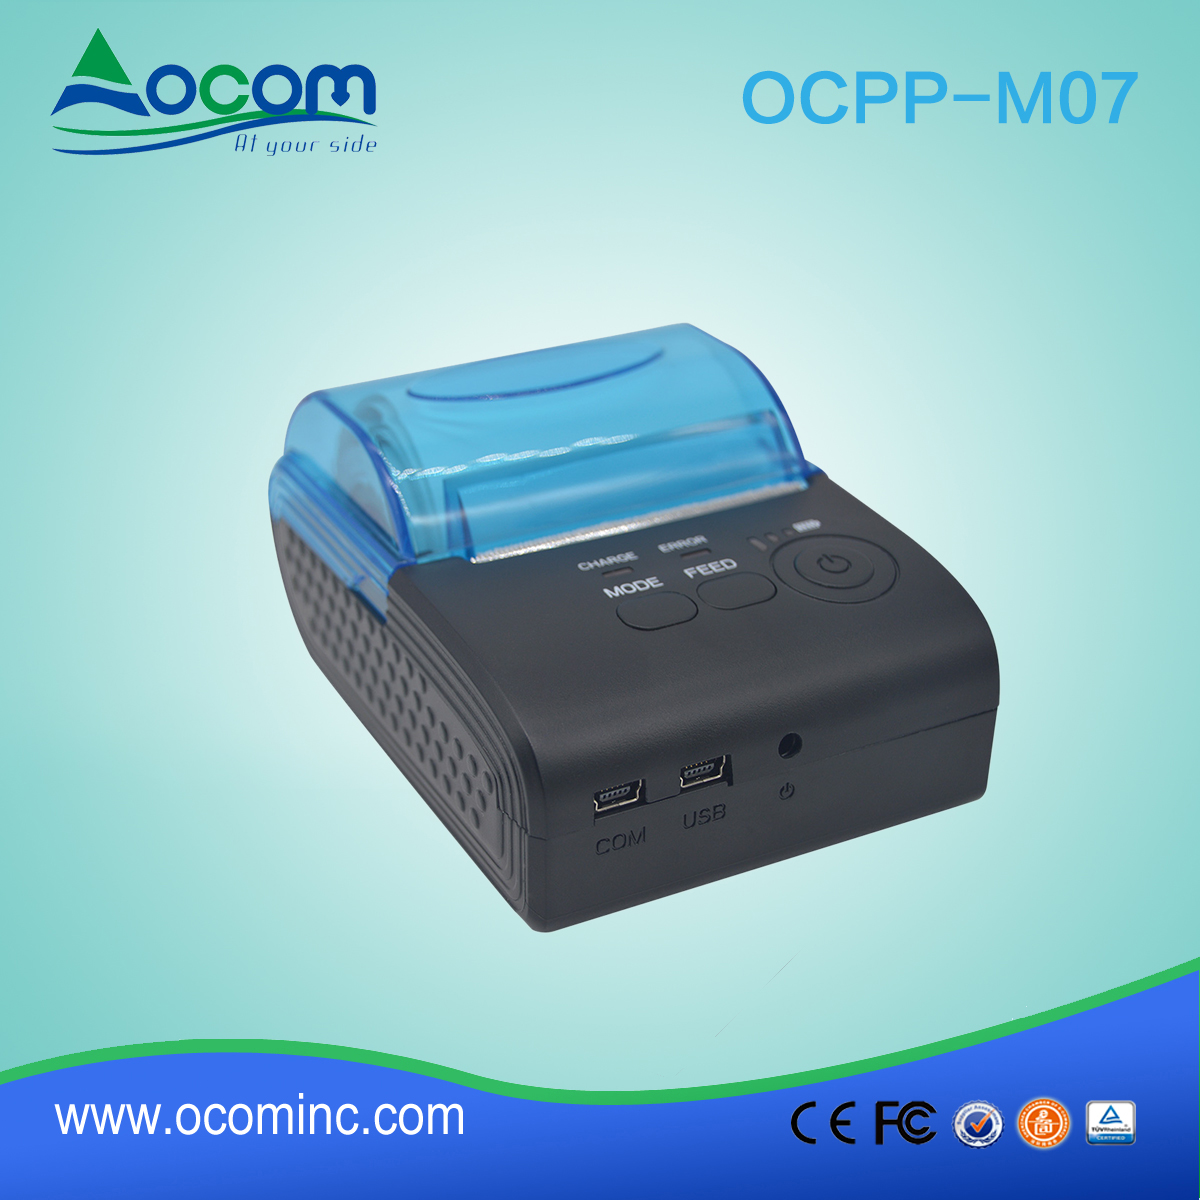 OCPP-M07 2017 draagbare draadloze bluetooth-printer voor taxi systeem